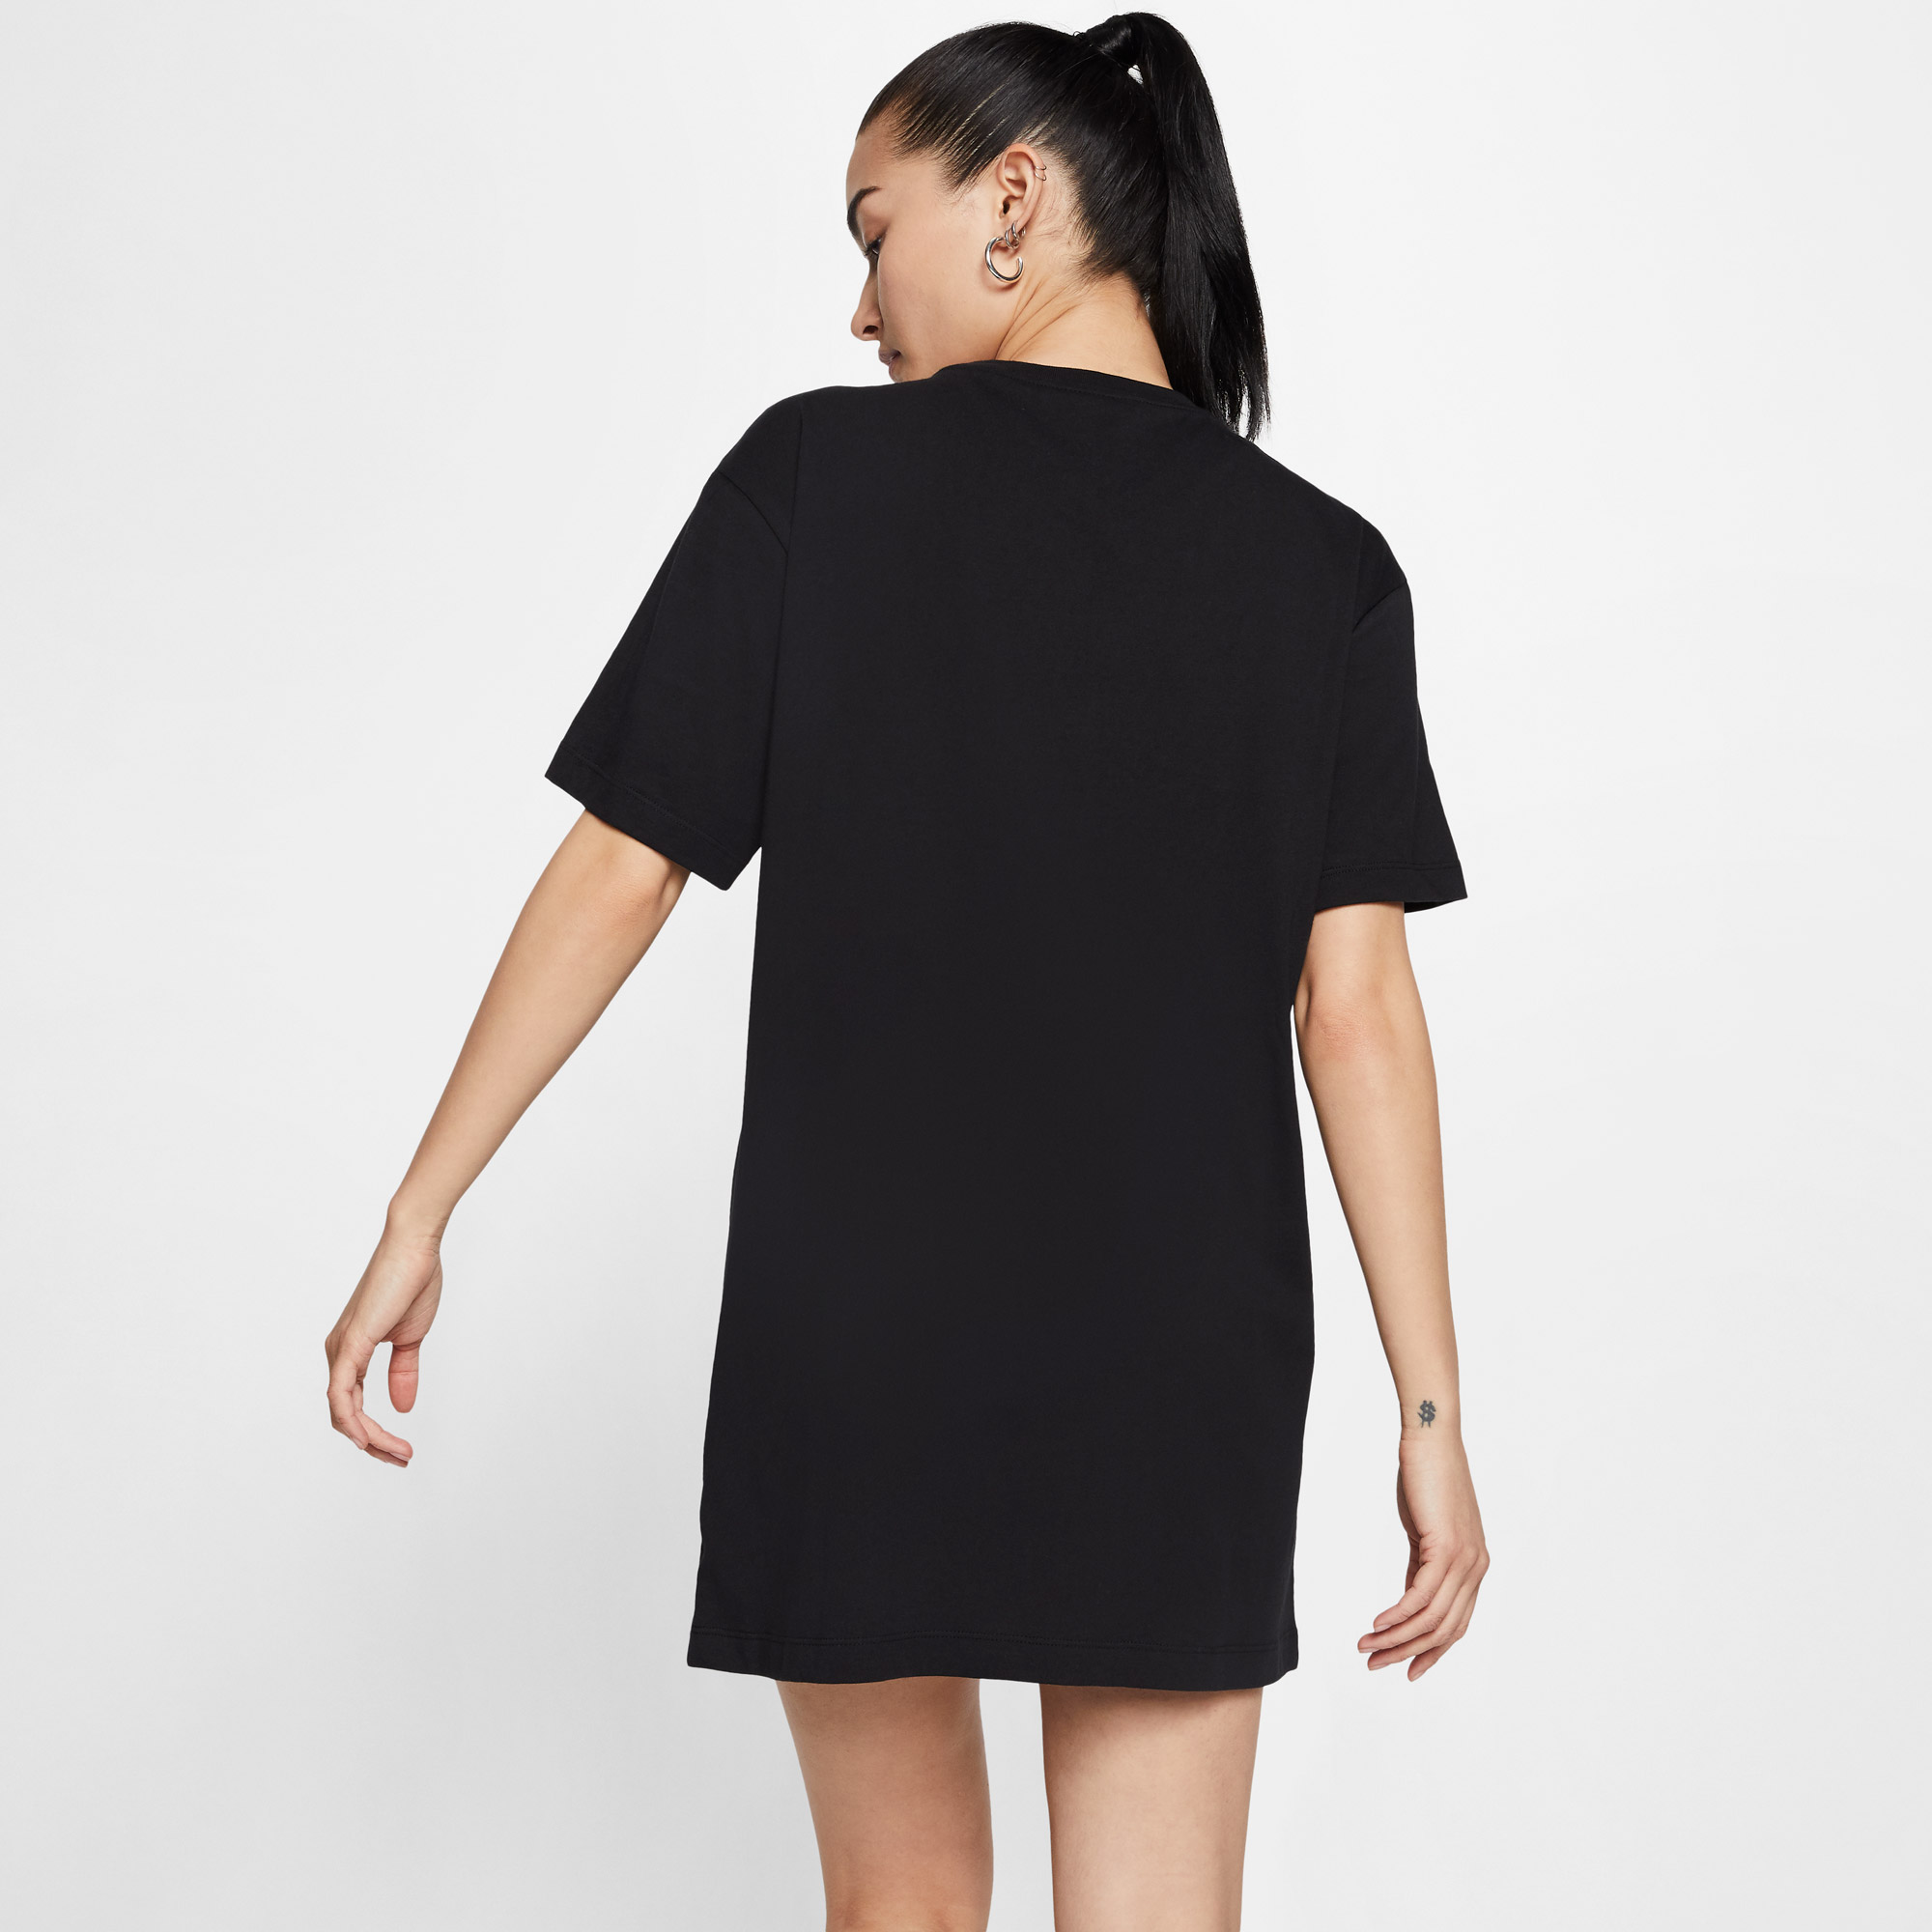 Nike Essential Kadın Siyah Elbise